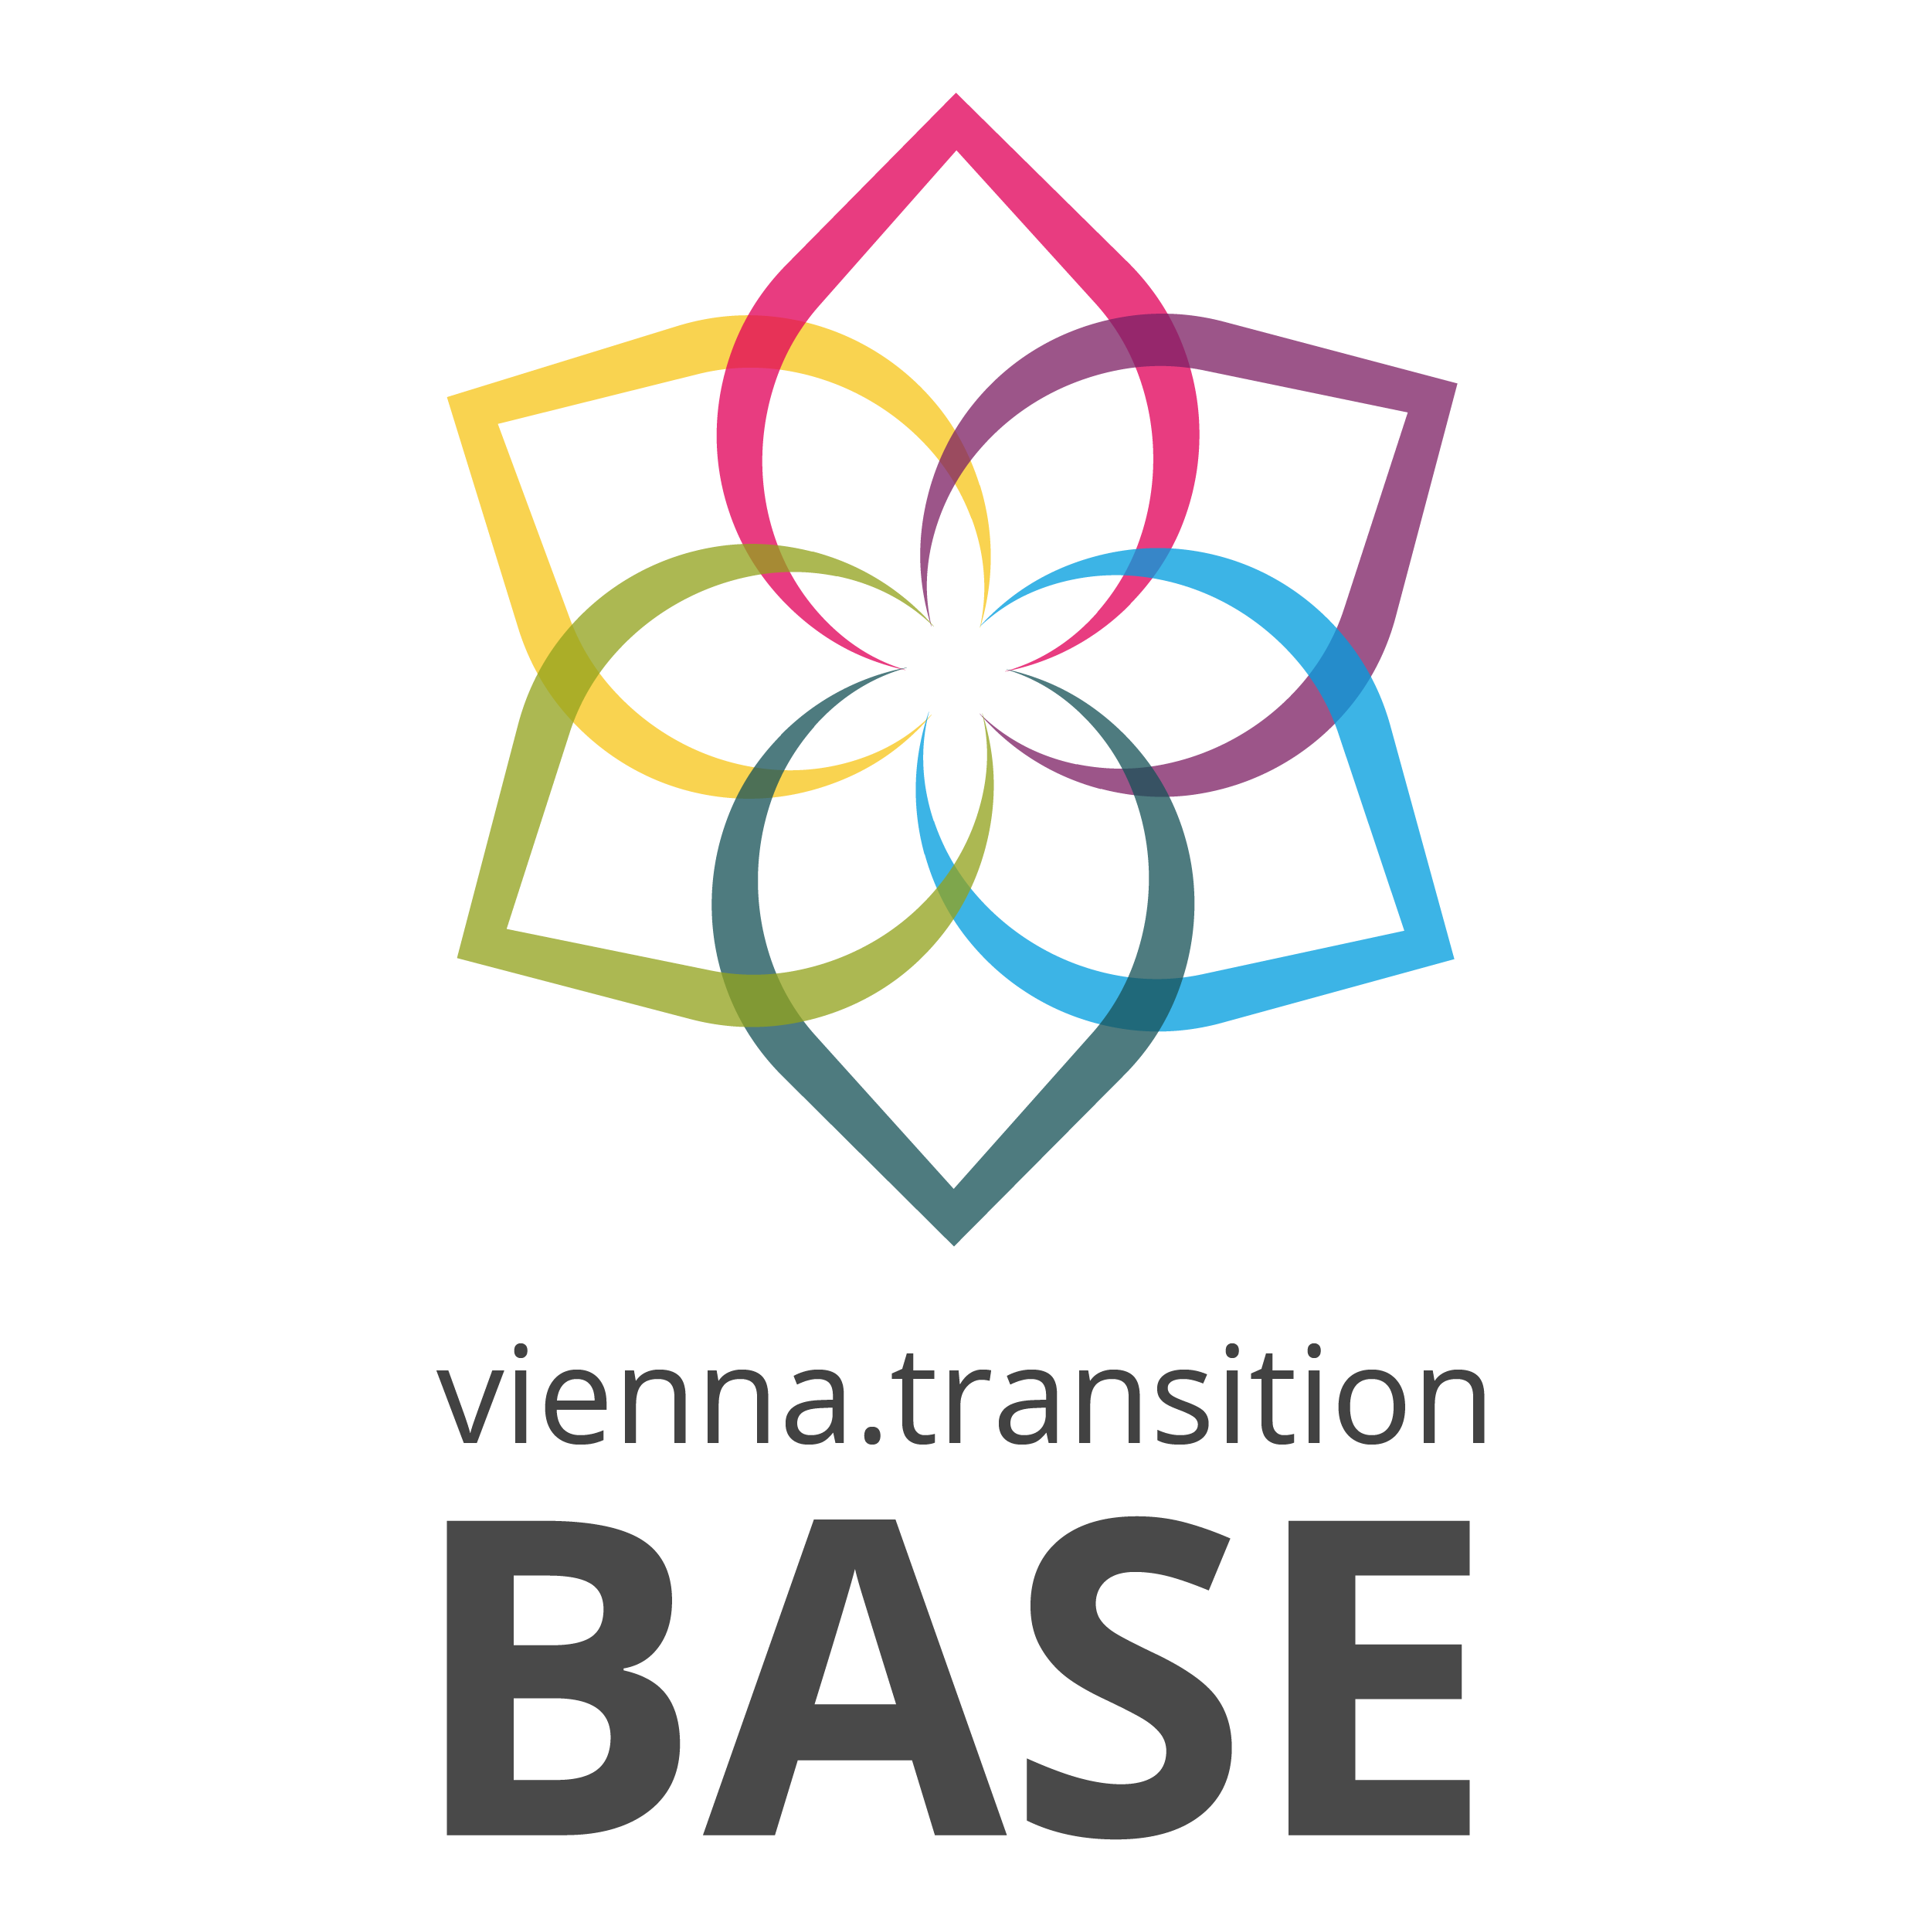 (c) Viennatransitionbase.wordpress.com